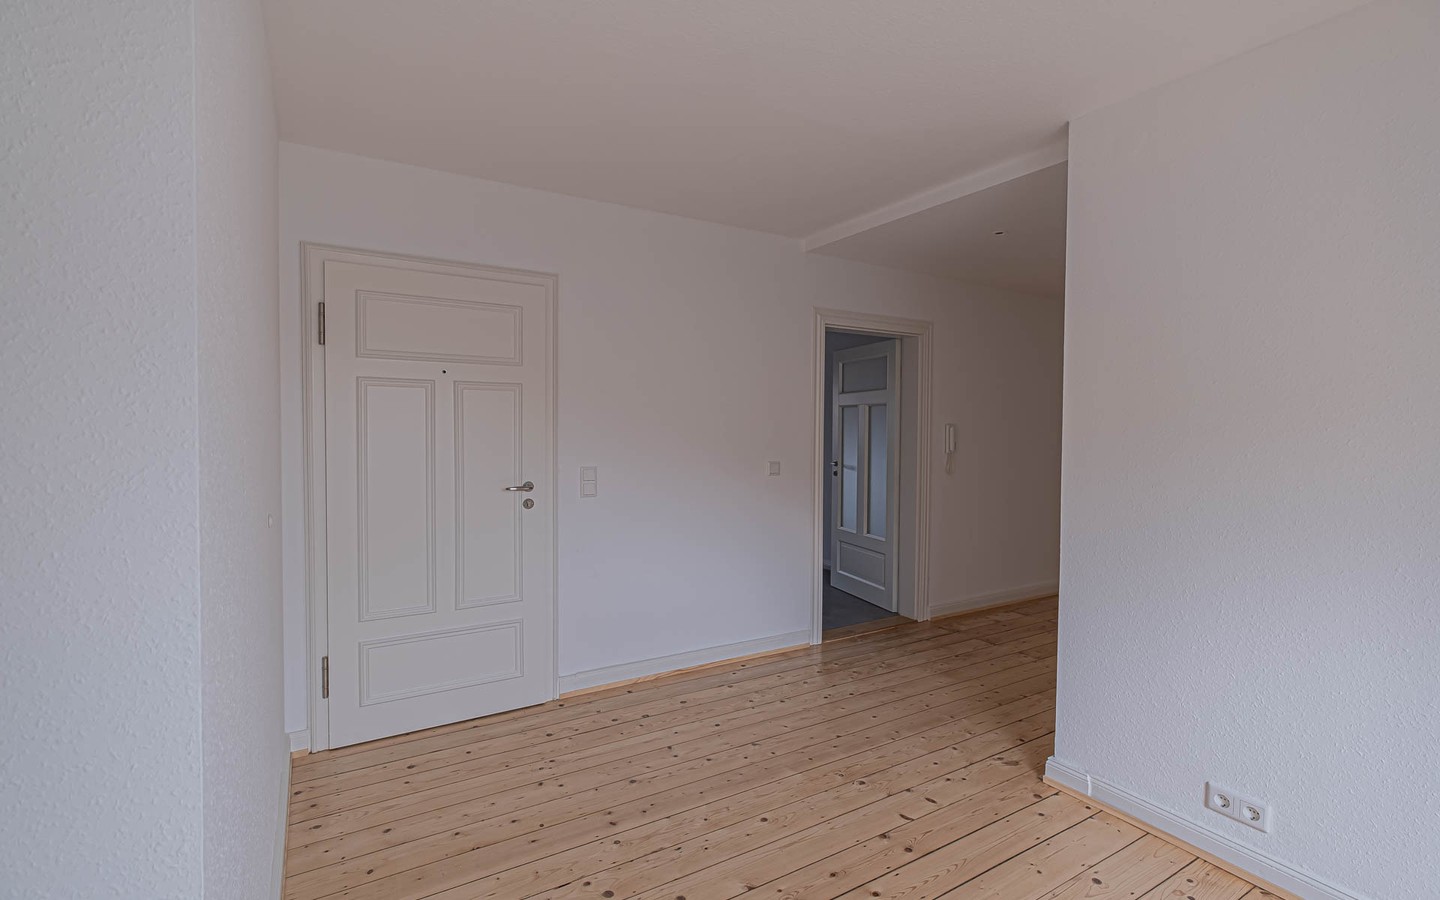 Eingangsbereich - Rarität – Dachgeschosswohnung mit Schlossblick -
 Ideal für kreative Singles oder Paare